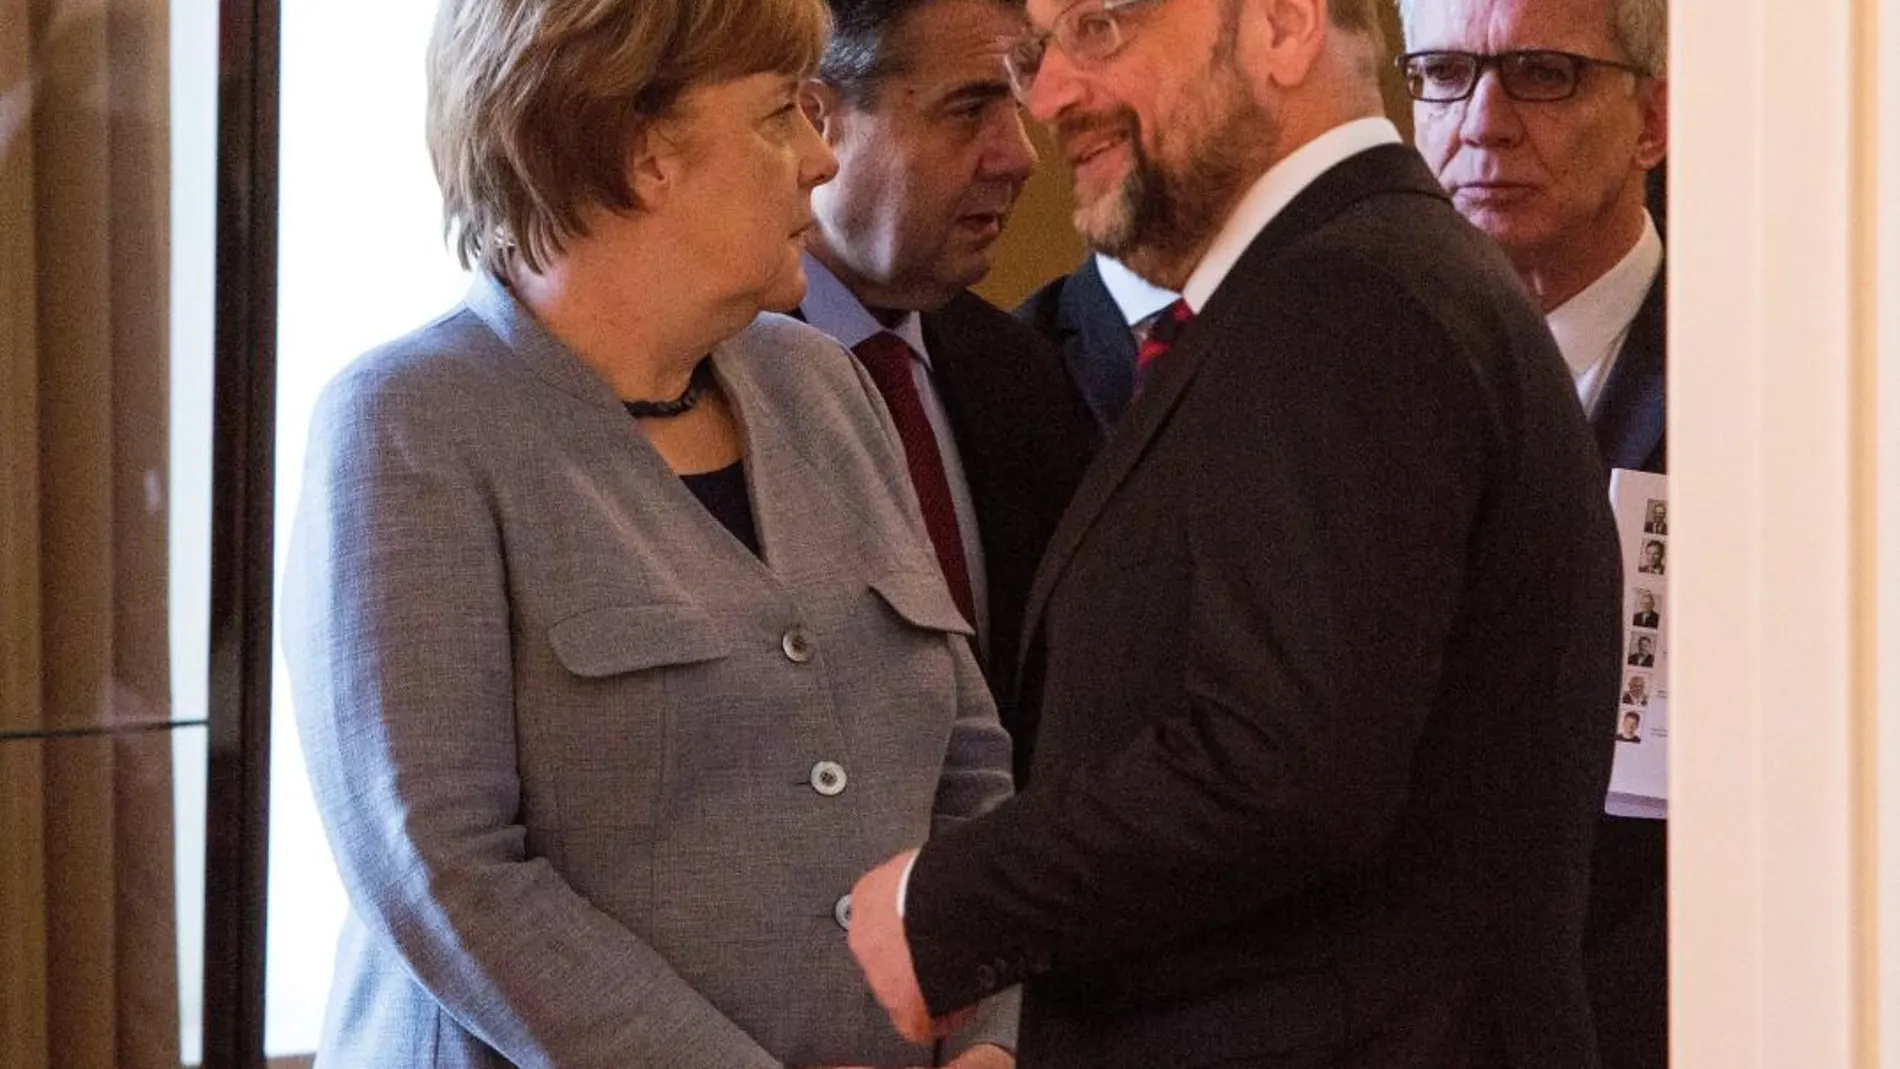 El líder del partido Socialdemócrata (SPD), Martin Schulz, la canciller alemana Angela Merkel